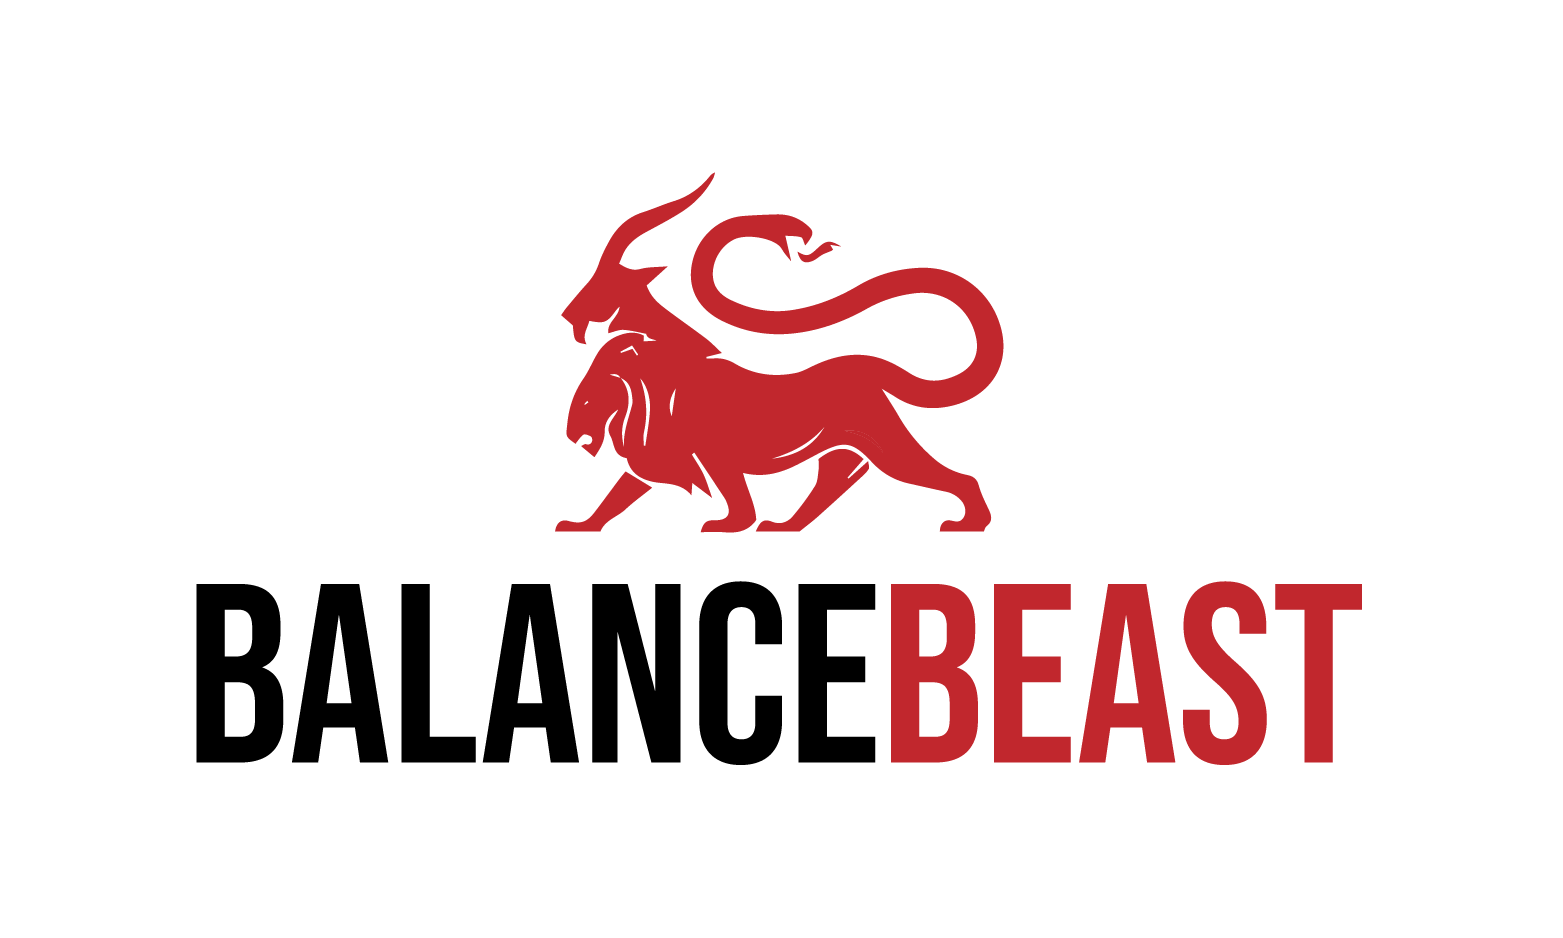 BalanceBeast.com - Creative brandable domain for sale